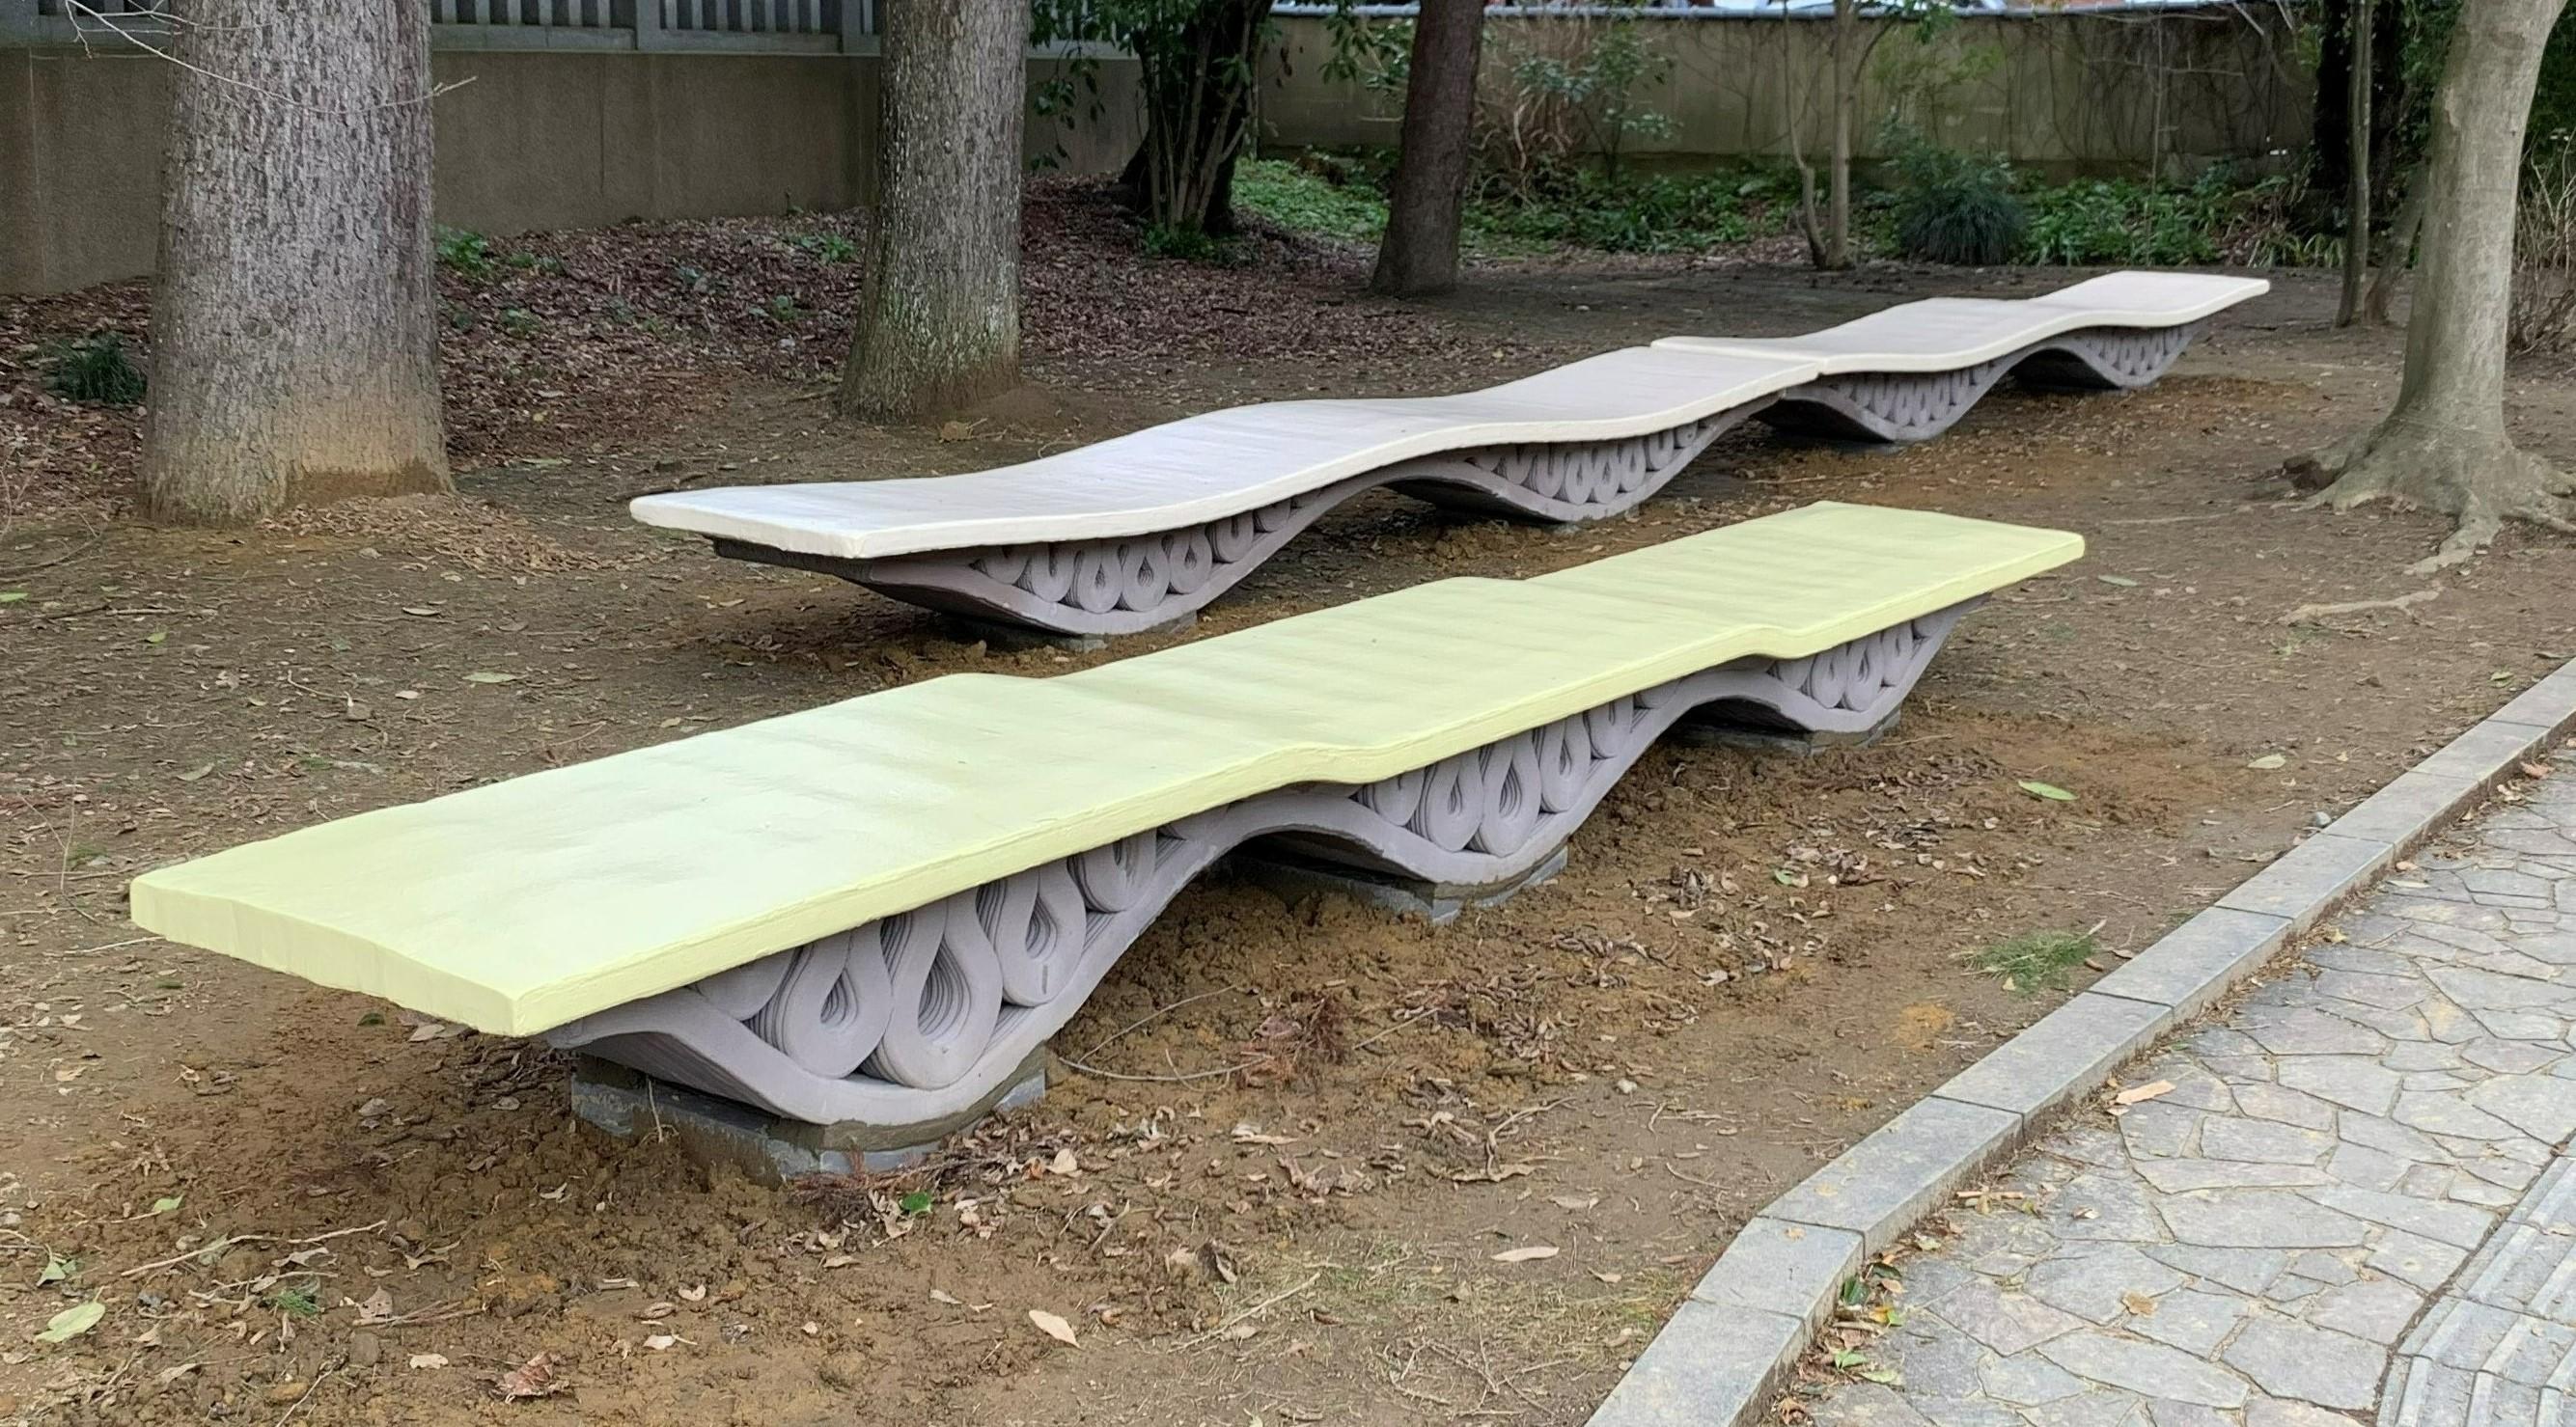 3Dプリンティング × CO₂で固まるコンクリート でベンチを製作。環境負荷低減と地域にゆかりのある意匠を実現して金沢市内の公園に設置--金沢工業大学、鹿島建設株式会社